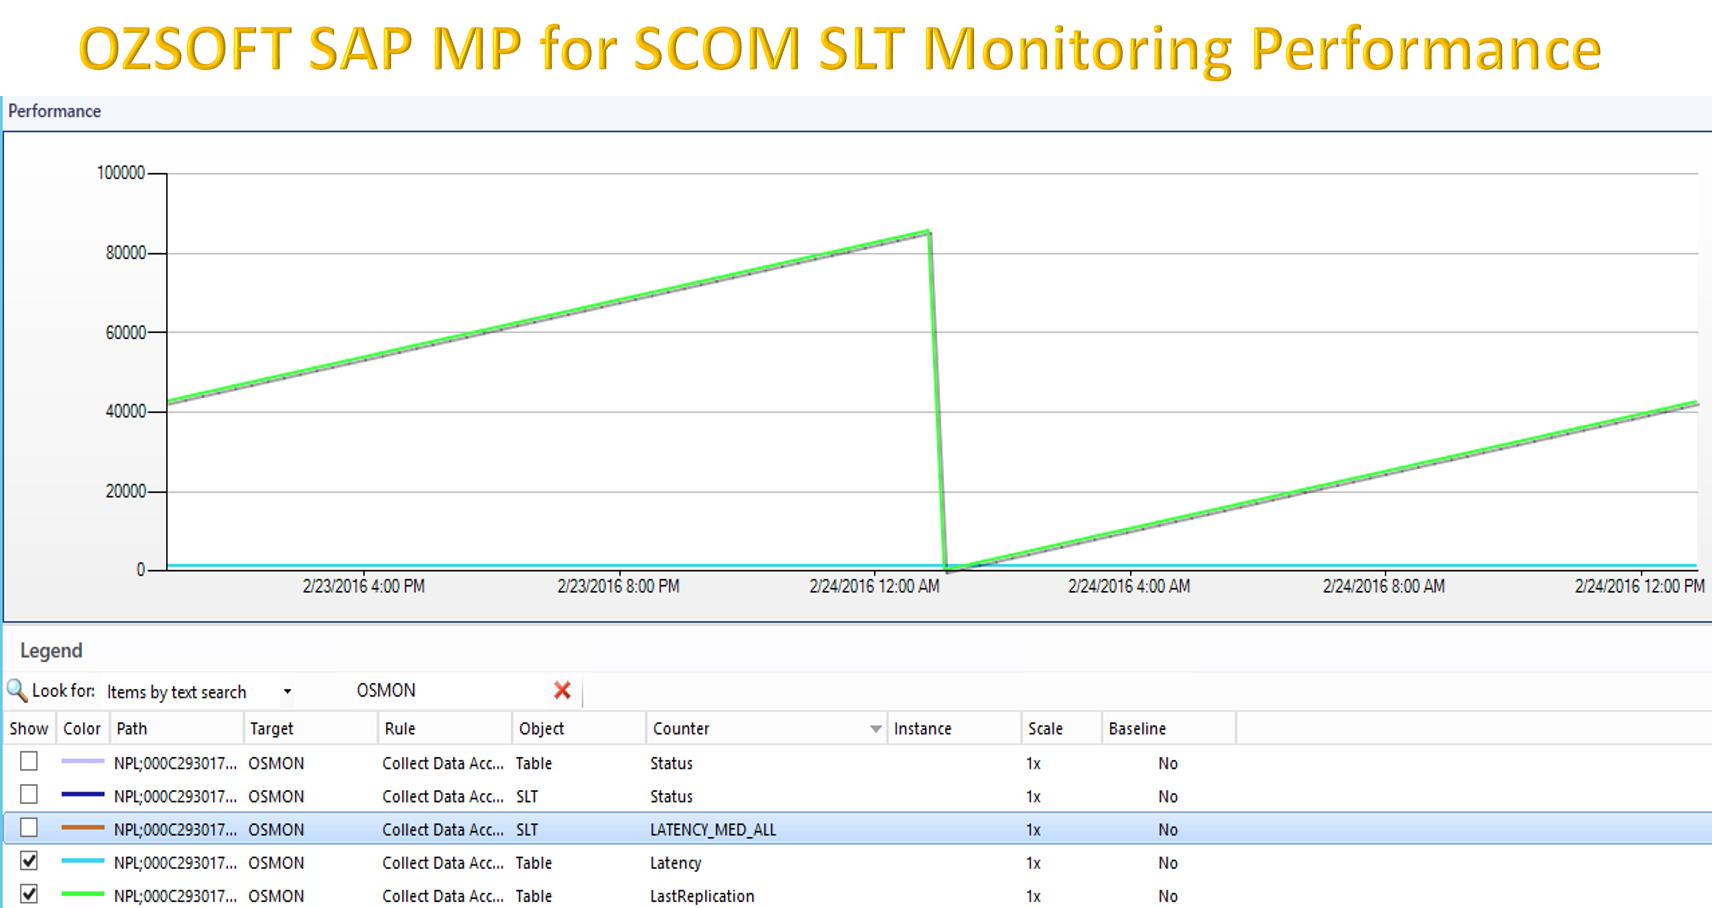 OZSOFT SAP MP for SCOM SLT Monitoring Performance